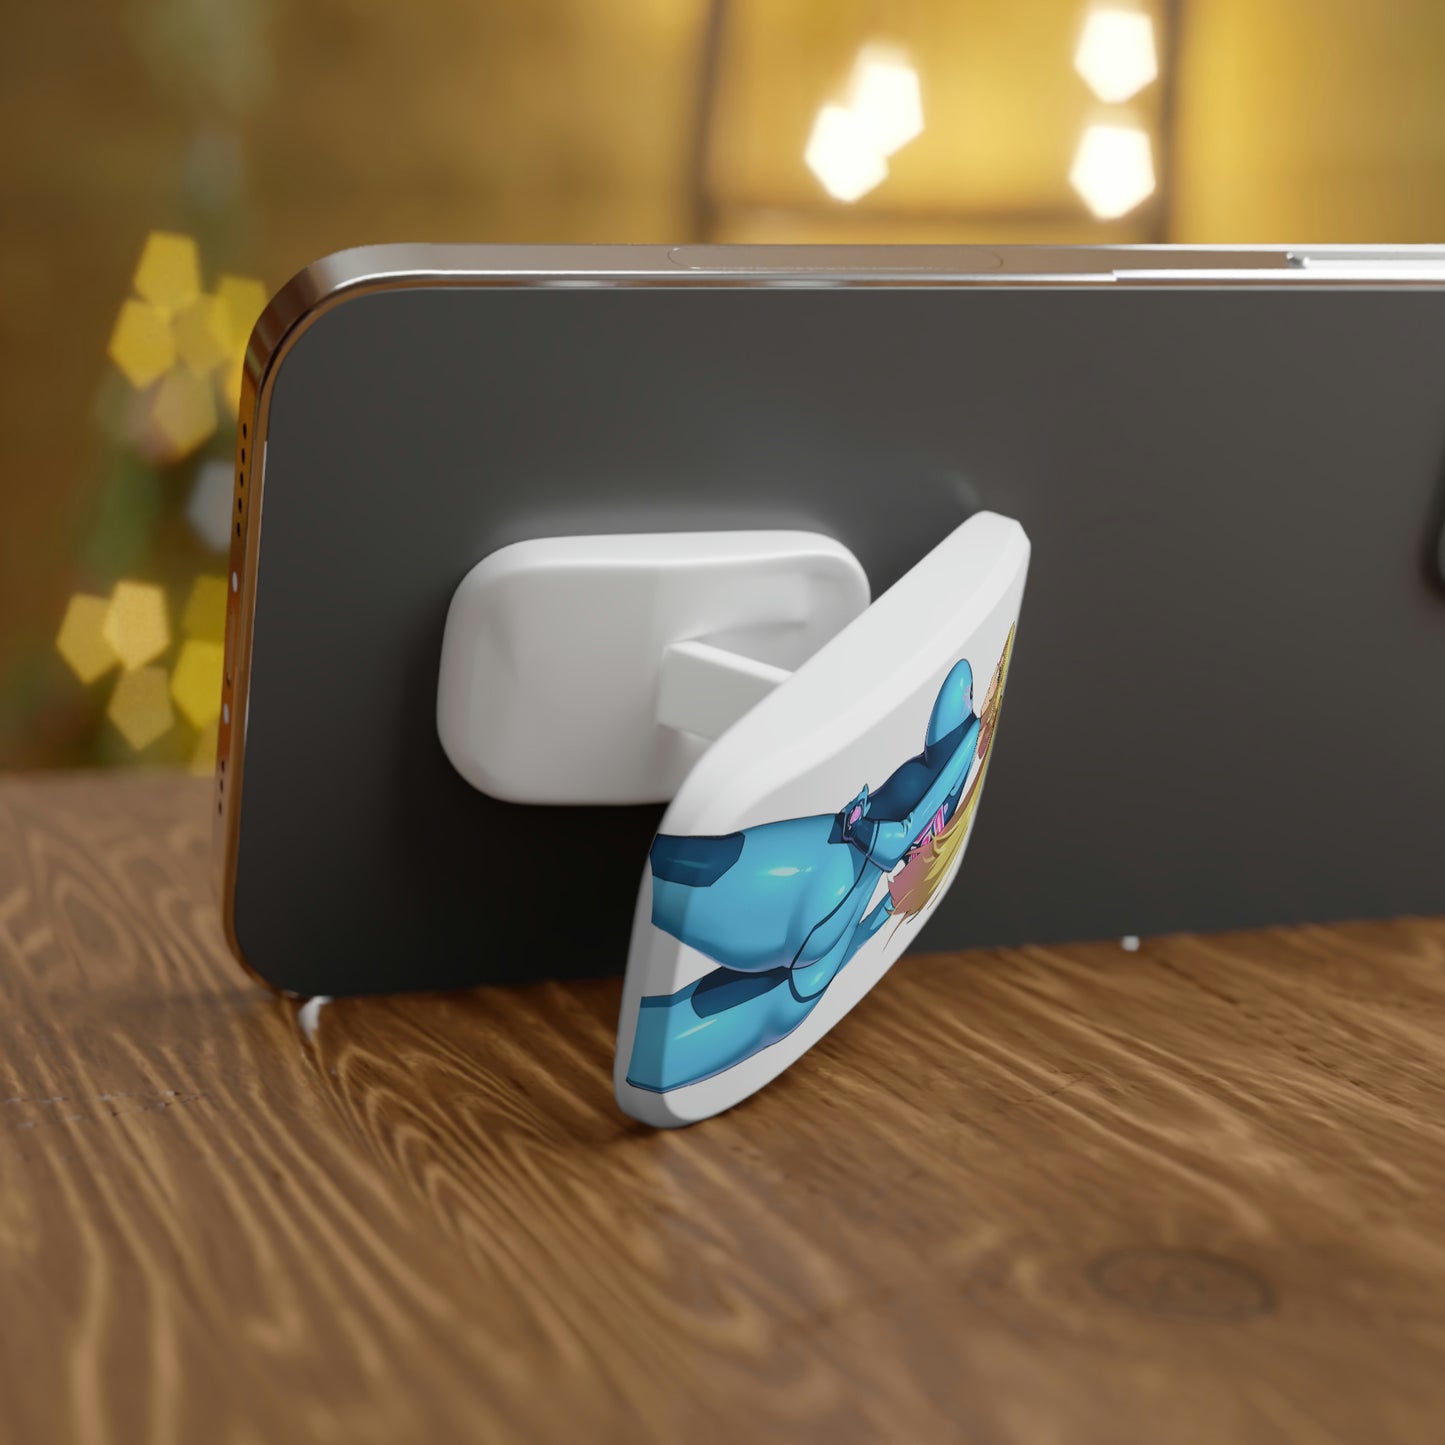 Samus Zero Suit Phone Holder - Metroid Phone Click-On Grip - Phone Grip Holder